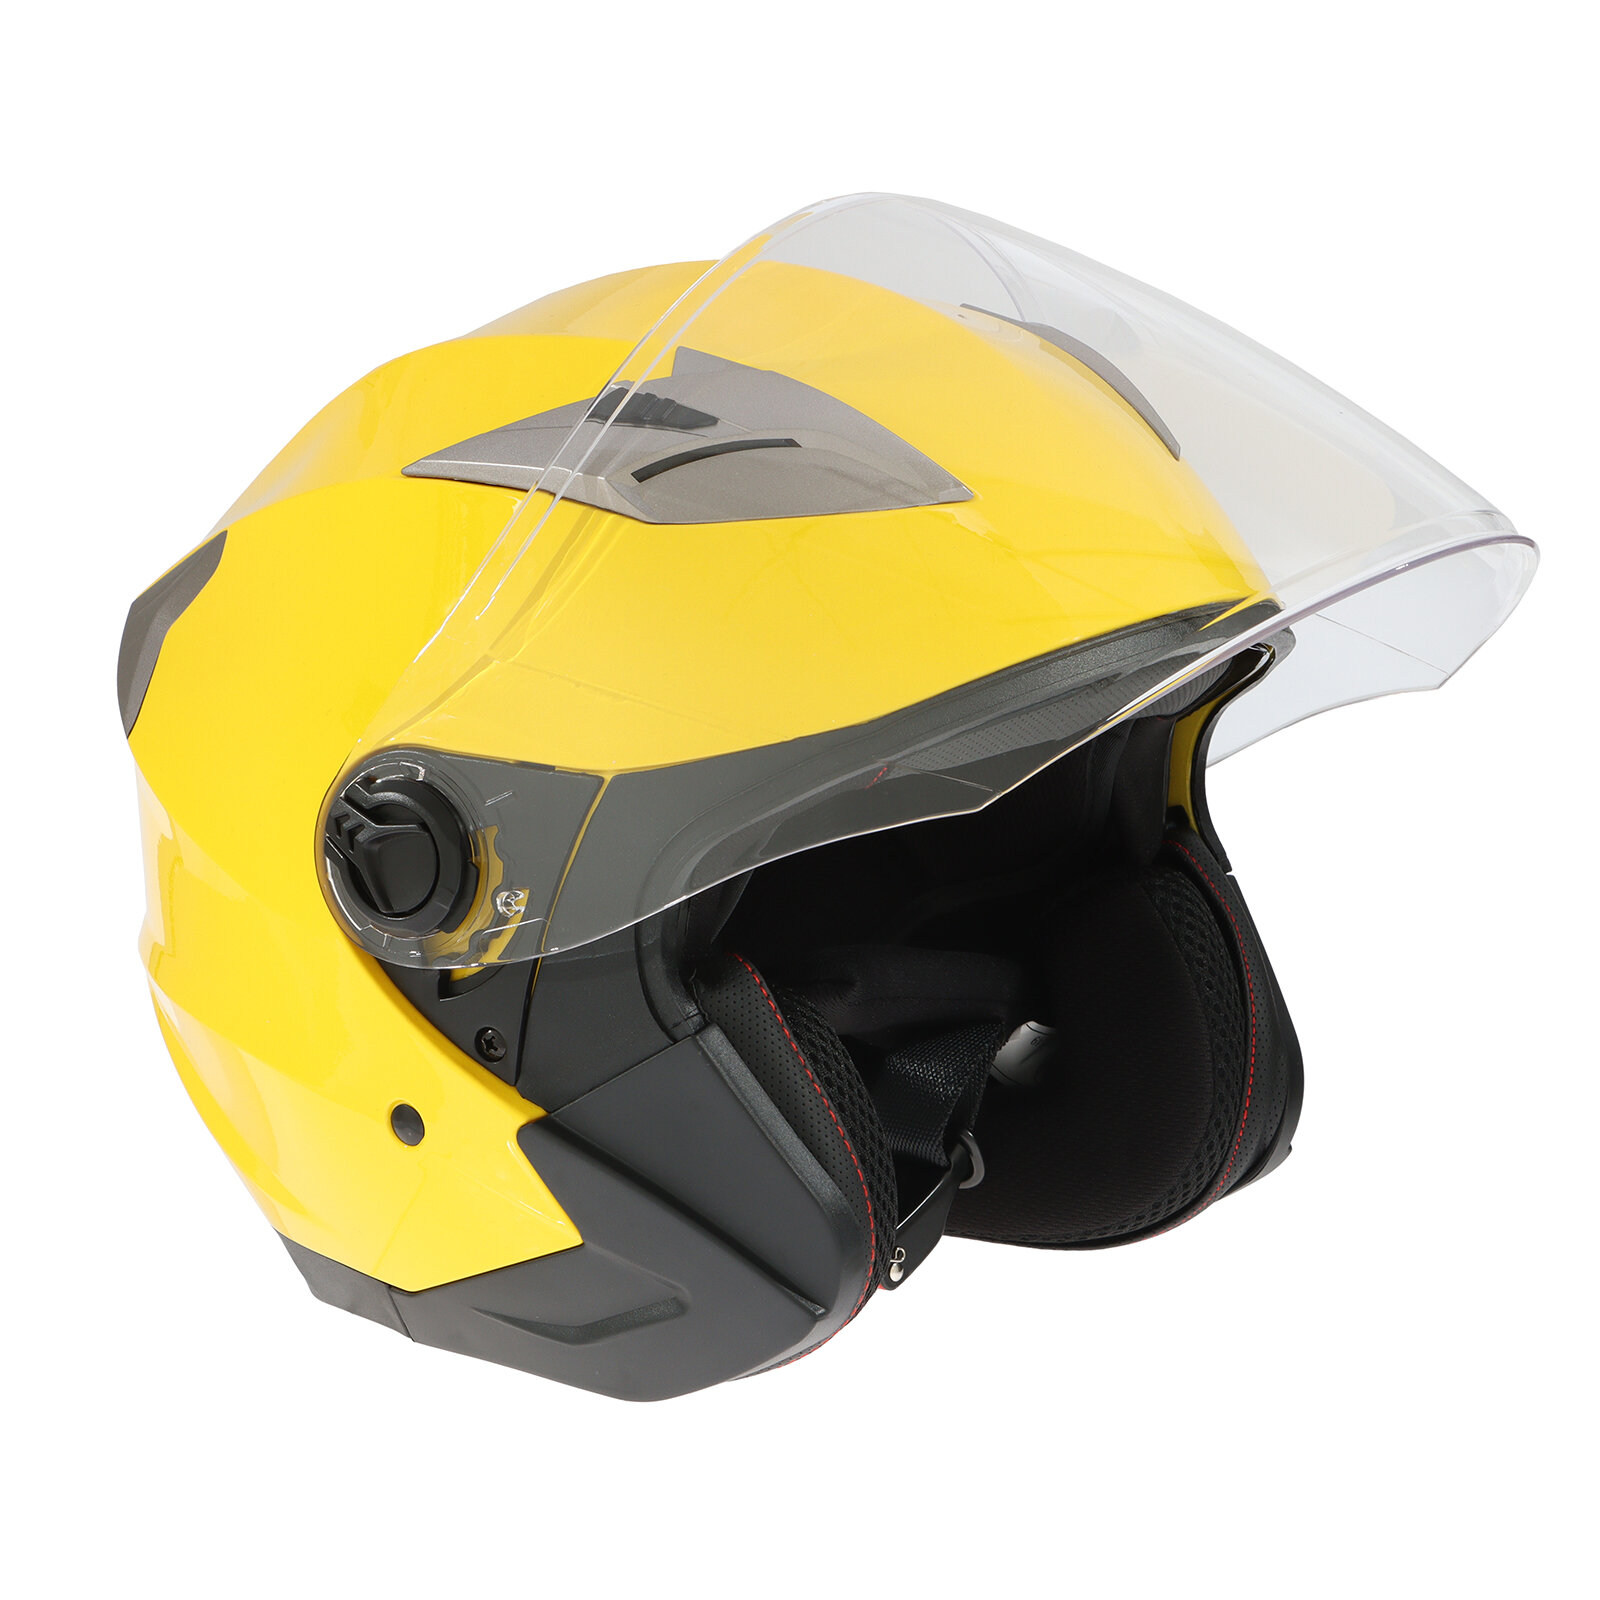 Шлем открытый с двумя визорами, размер L, модель - BLD-708E, желтый глянцевый 9845823